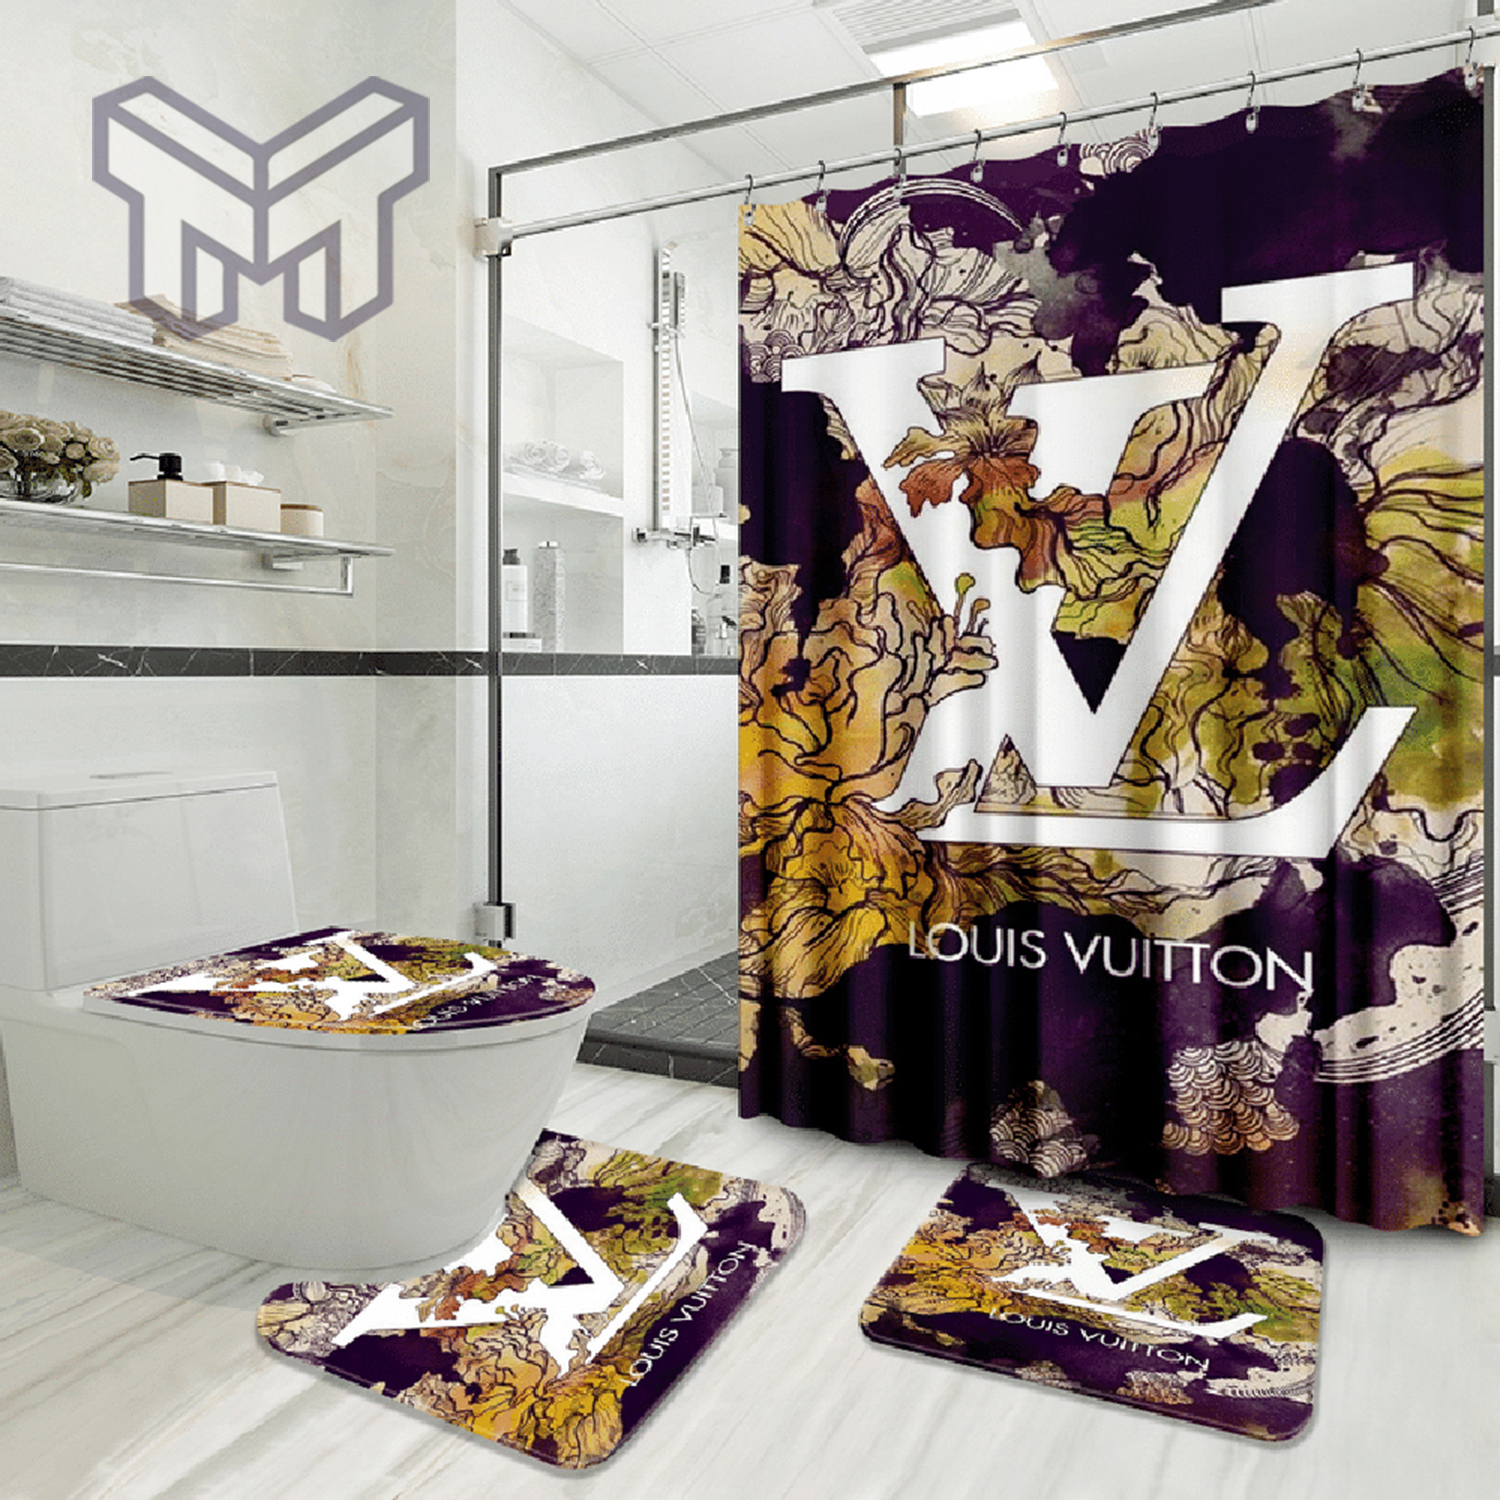 Gucci New Luxury Brand Logo Premium Bathroom Set Home Decor Shower Curtain  And Rug Toilet Seat Lid Covers Bathroom Set - Muranotex Store